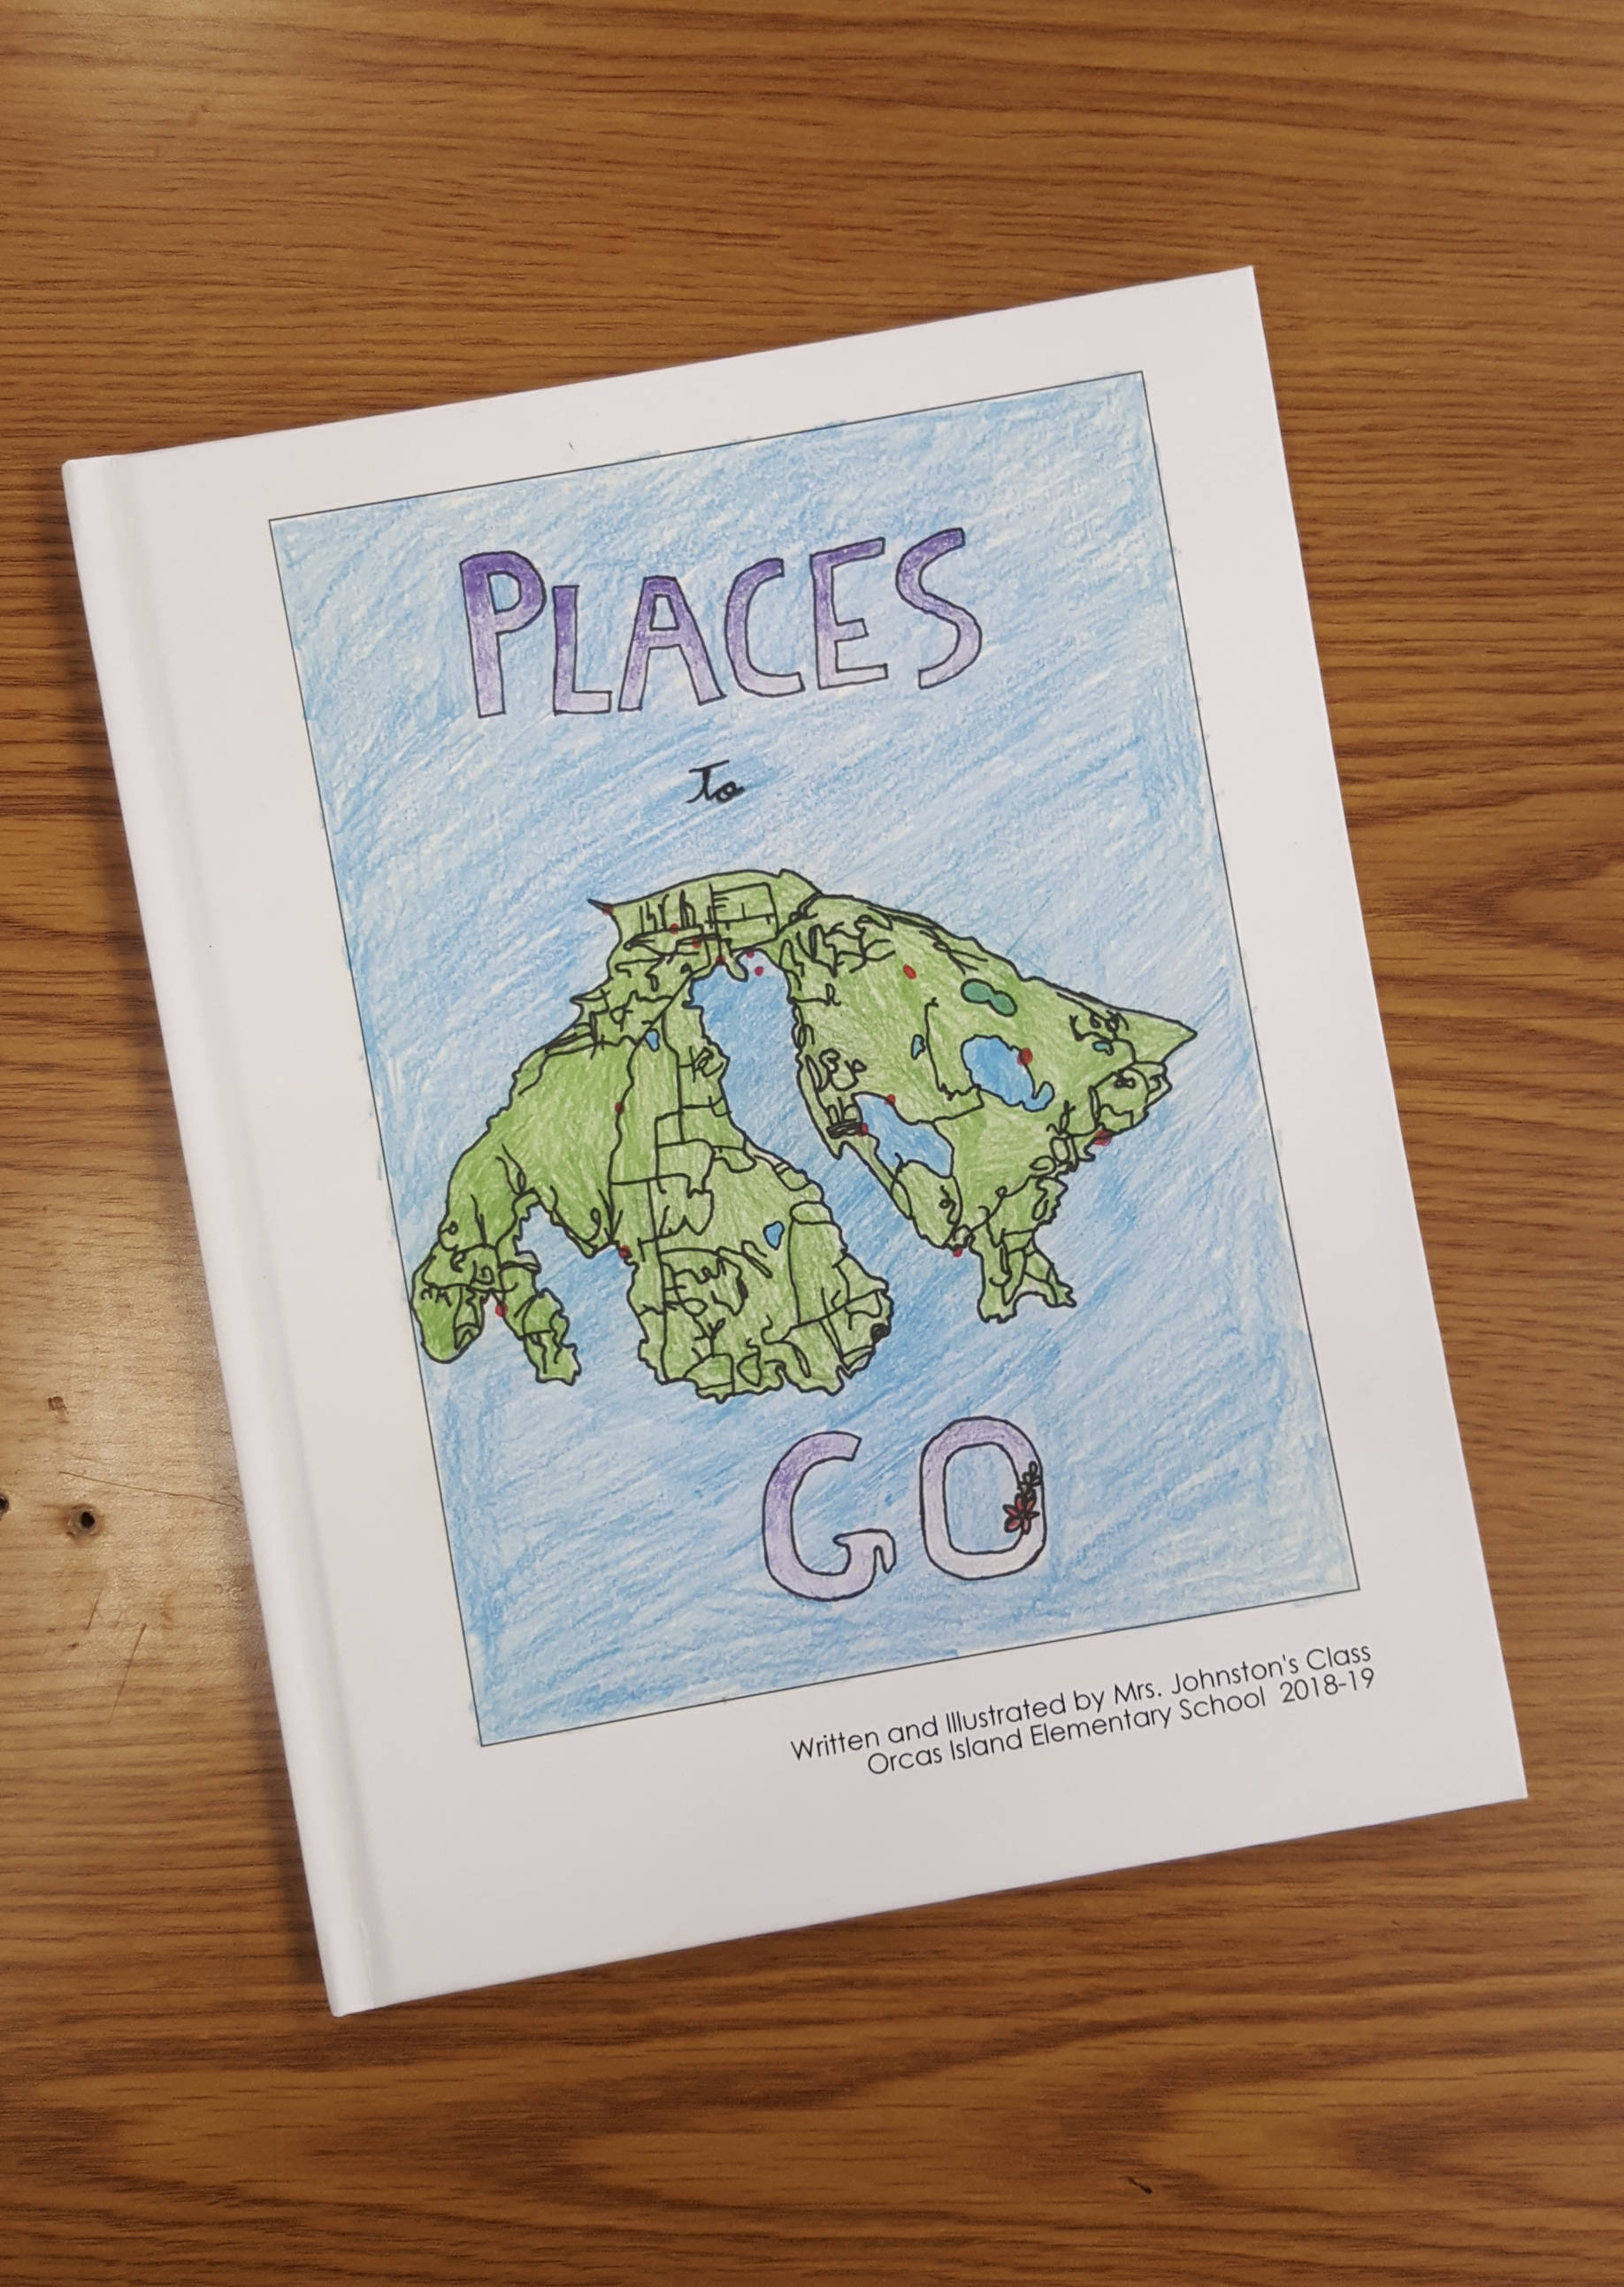 Elementary students publish book